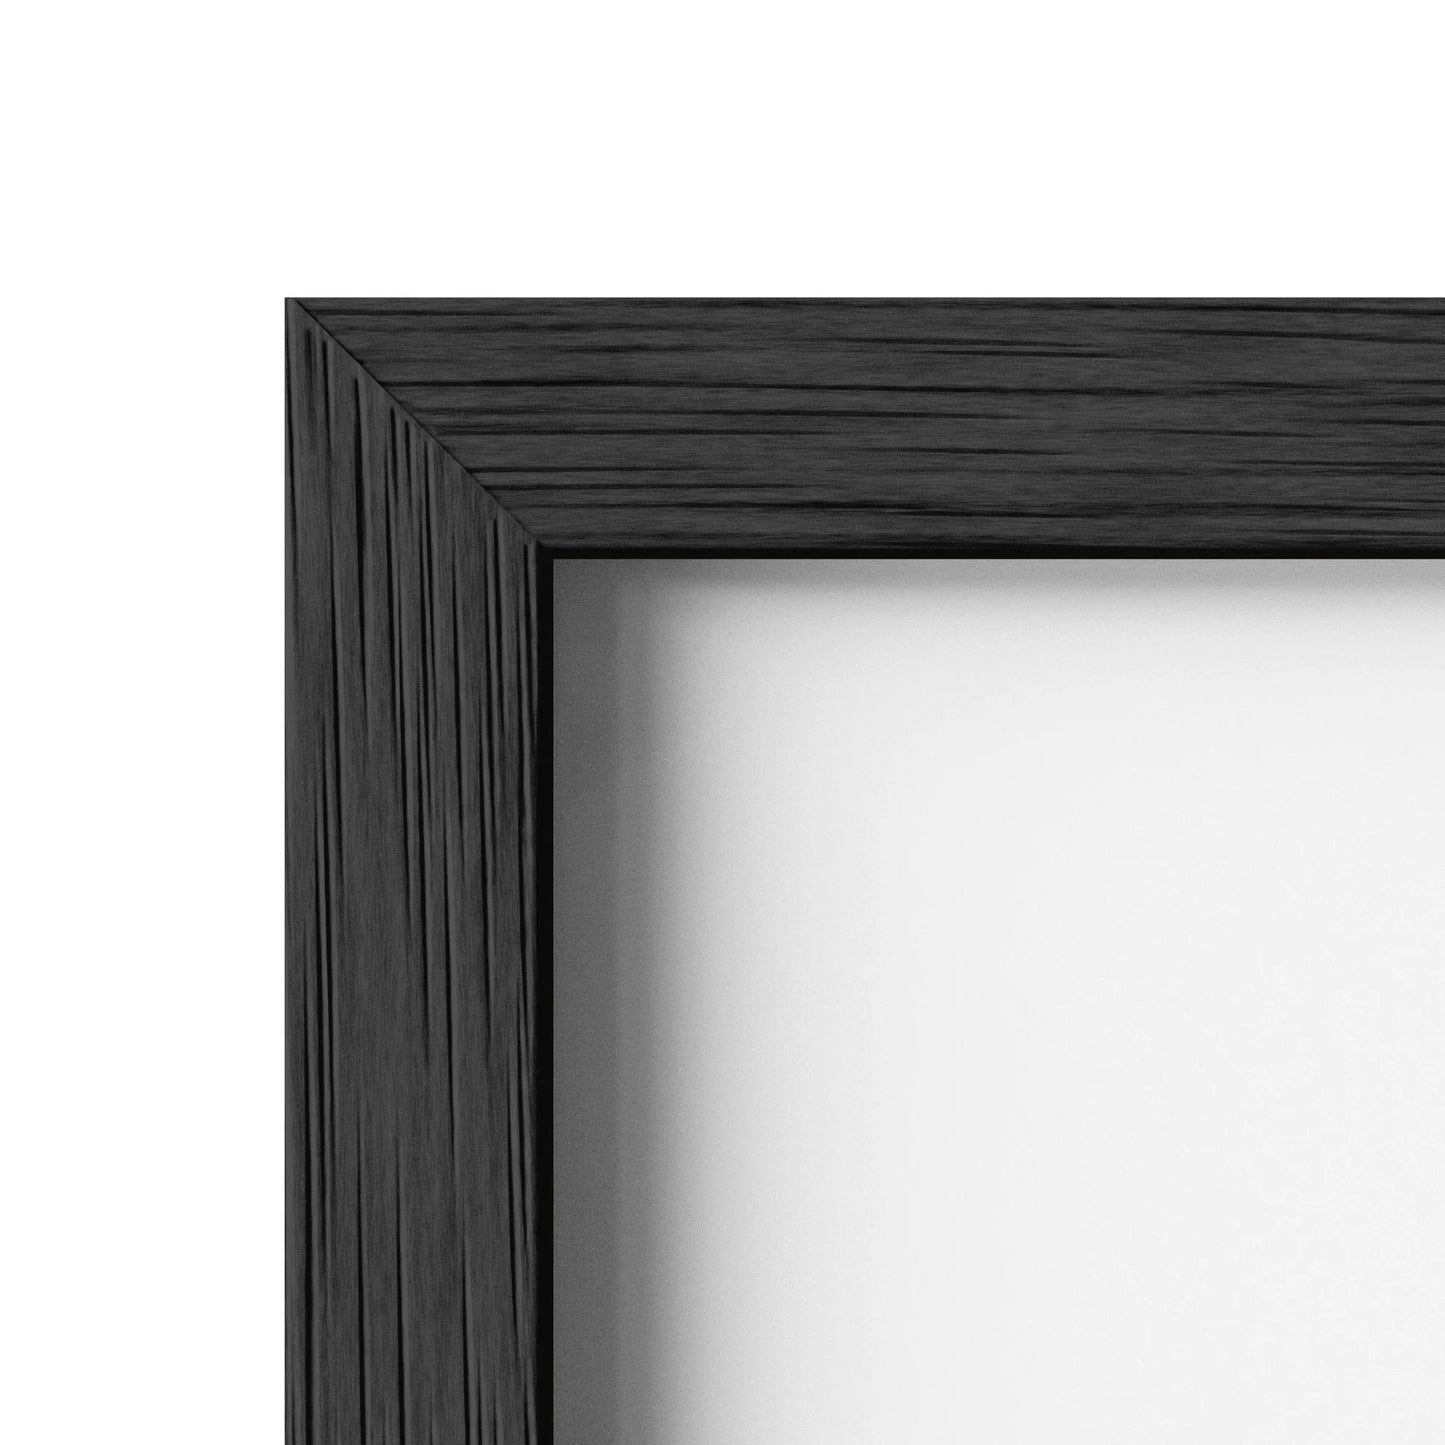 Black Oak Frame - 8x10